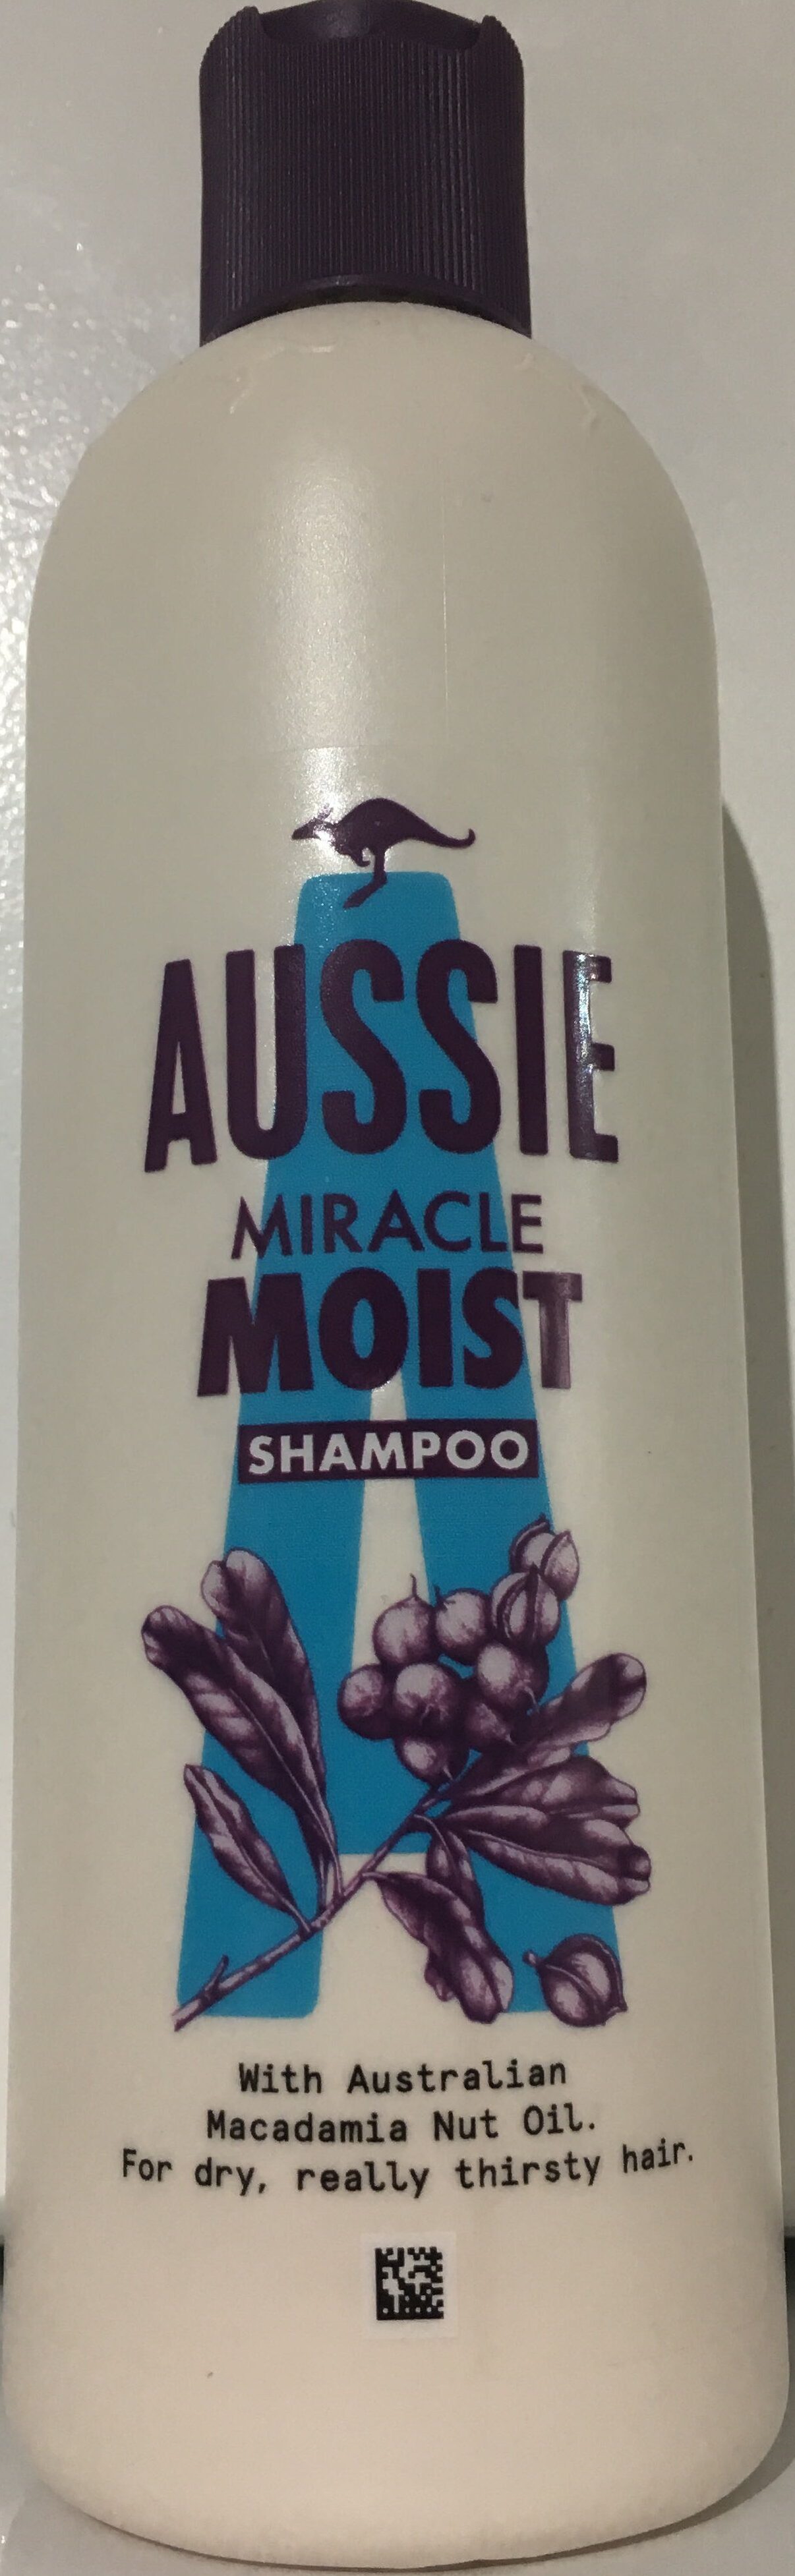 underordnet Sow jomfru Miracle Moist Shampoo - Aussie - 300ml